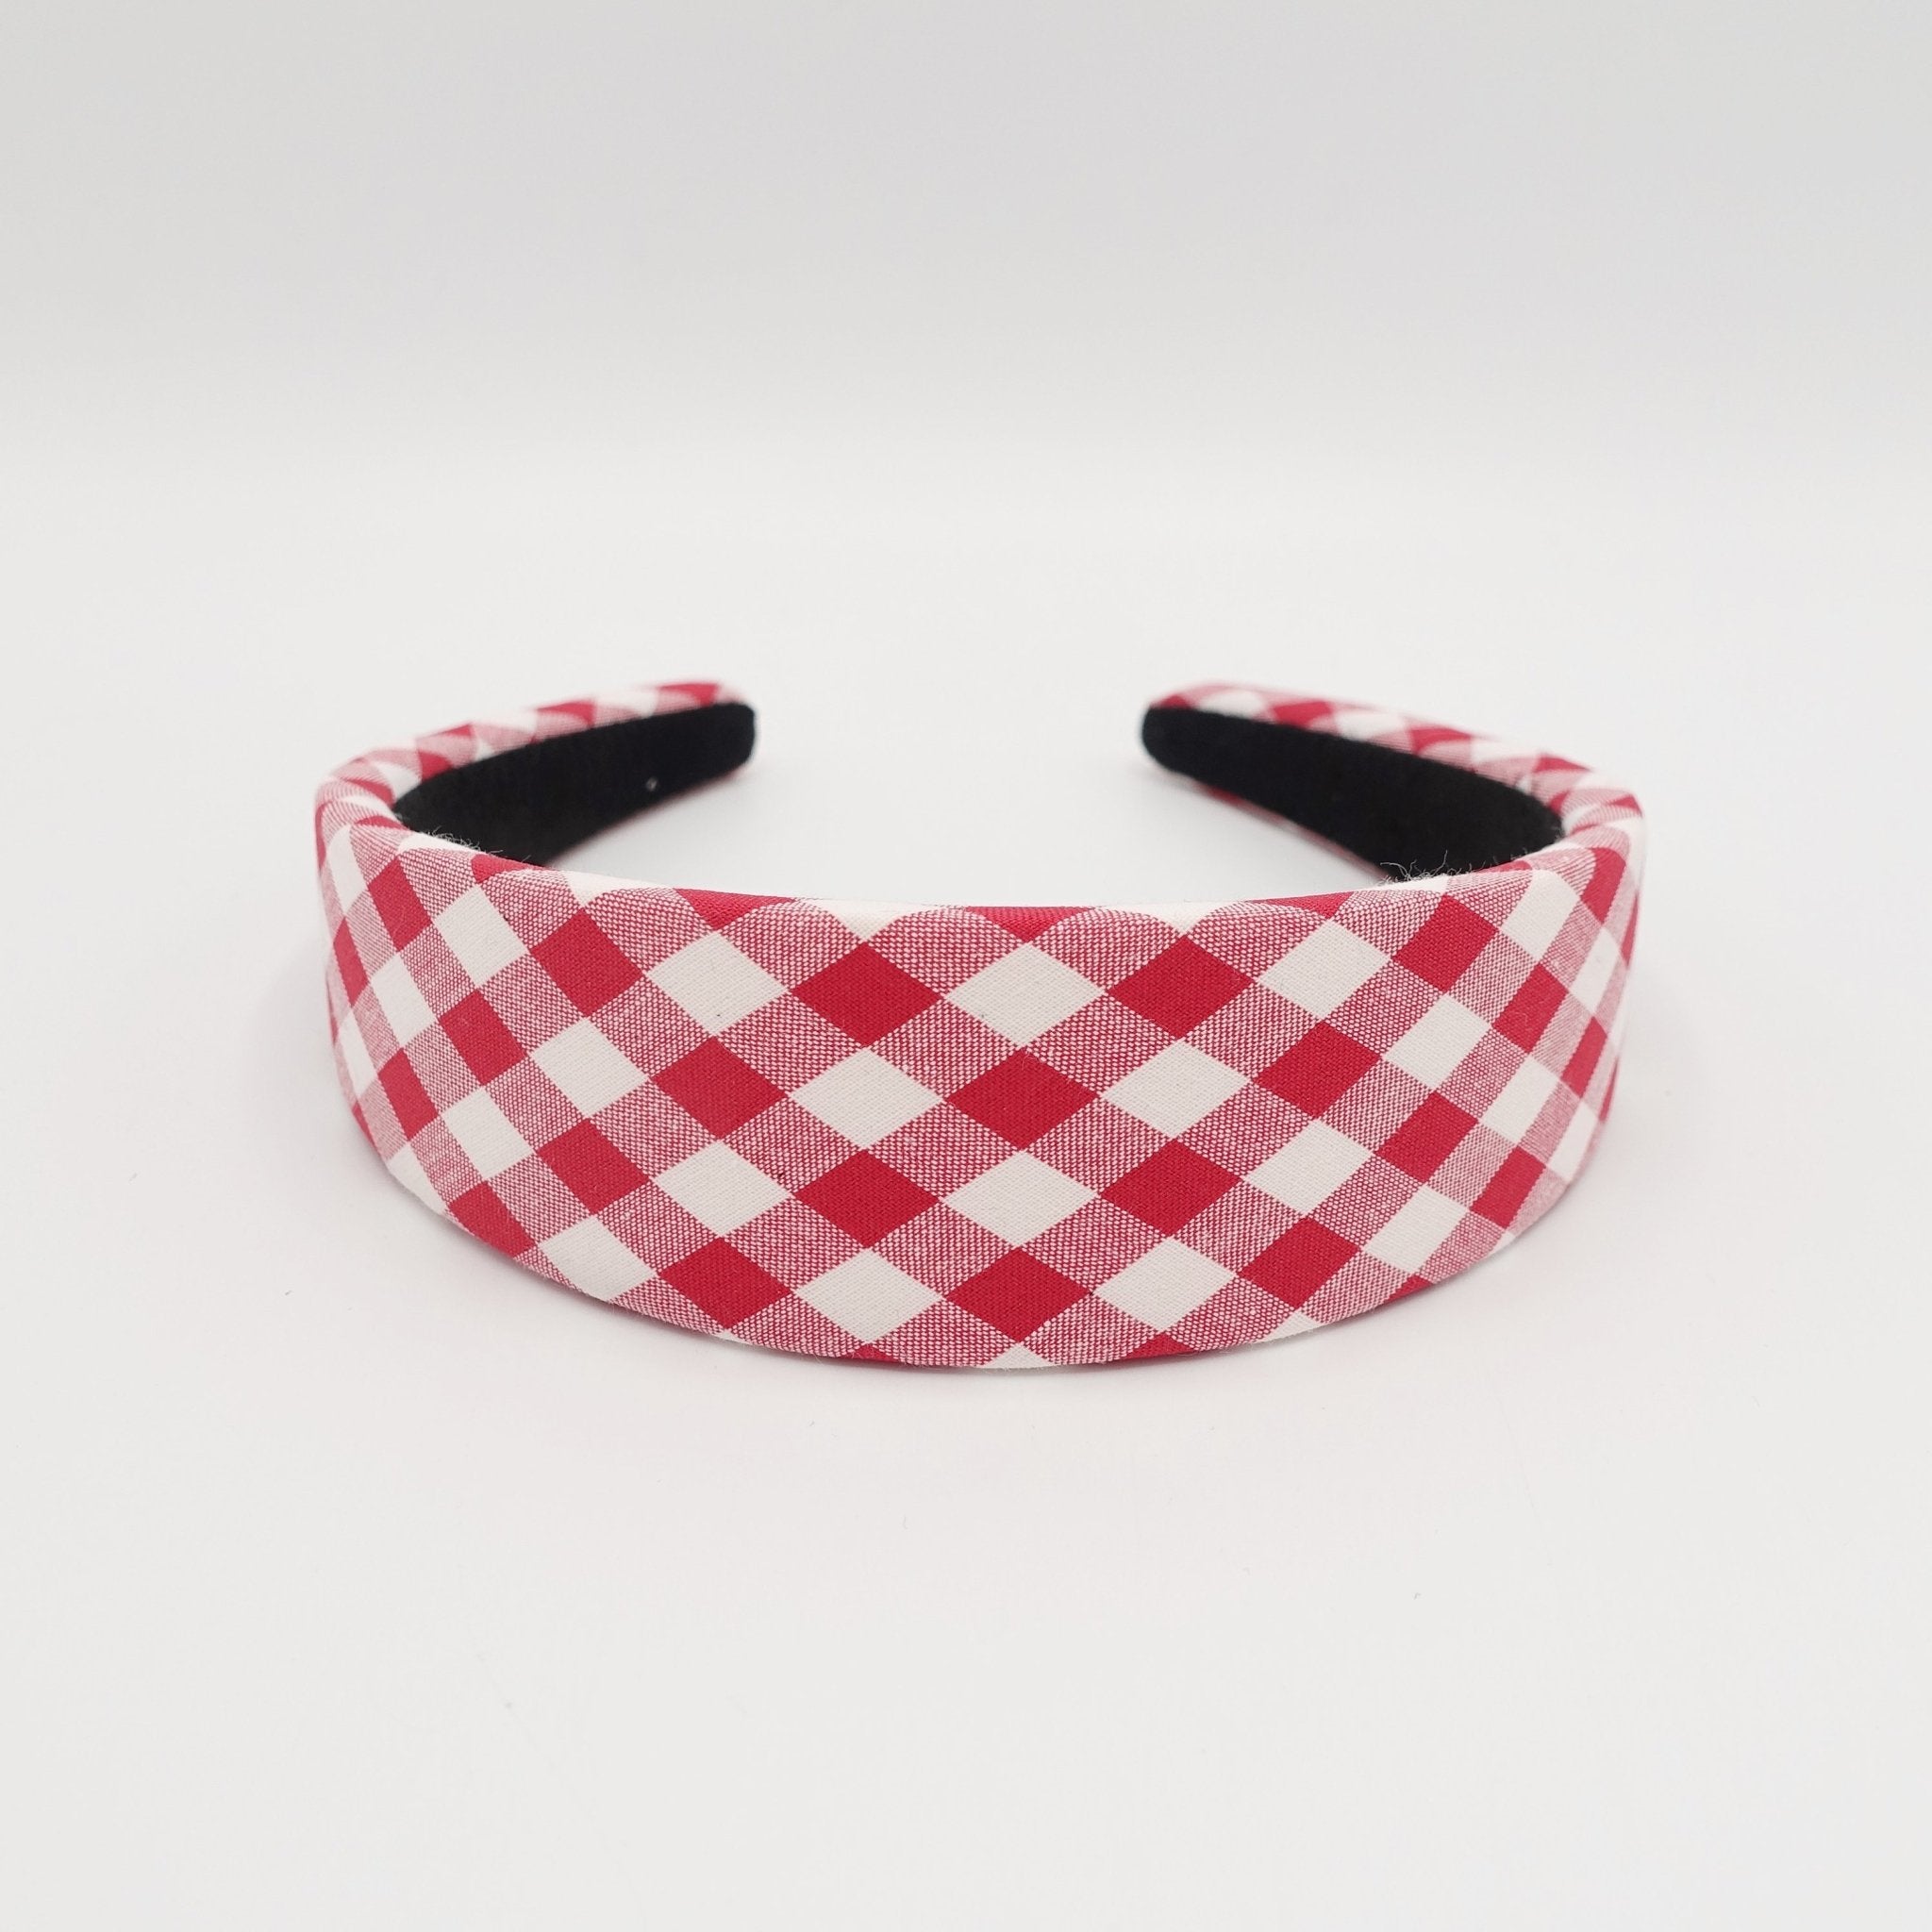 VeryShine Headband Red gingham check padded headband casual hairband for women